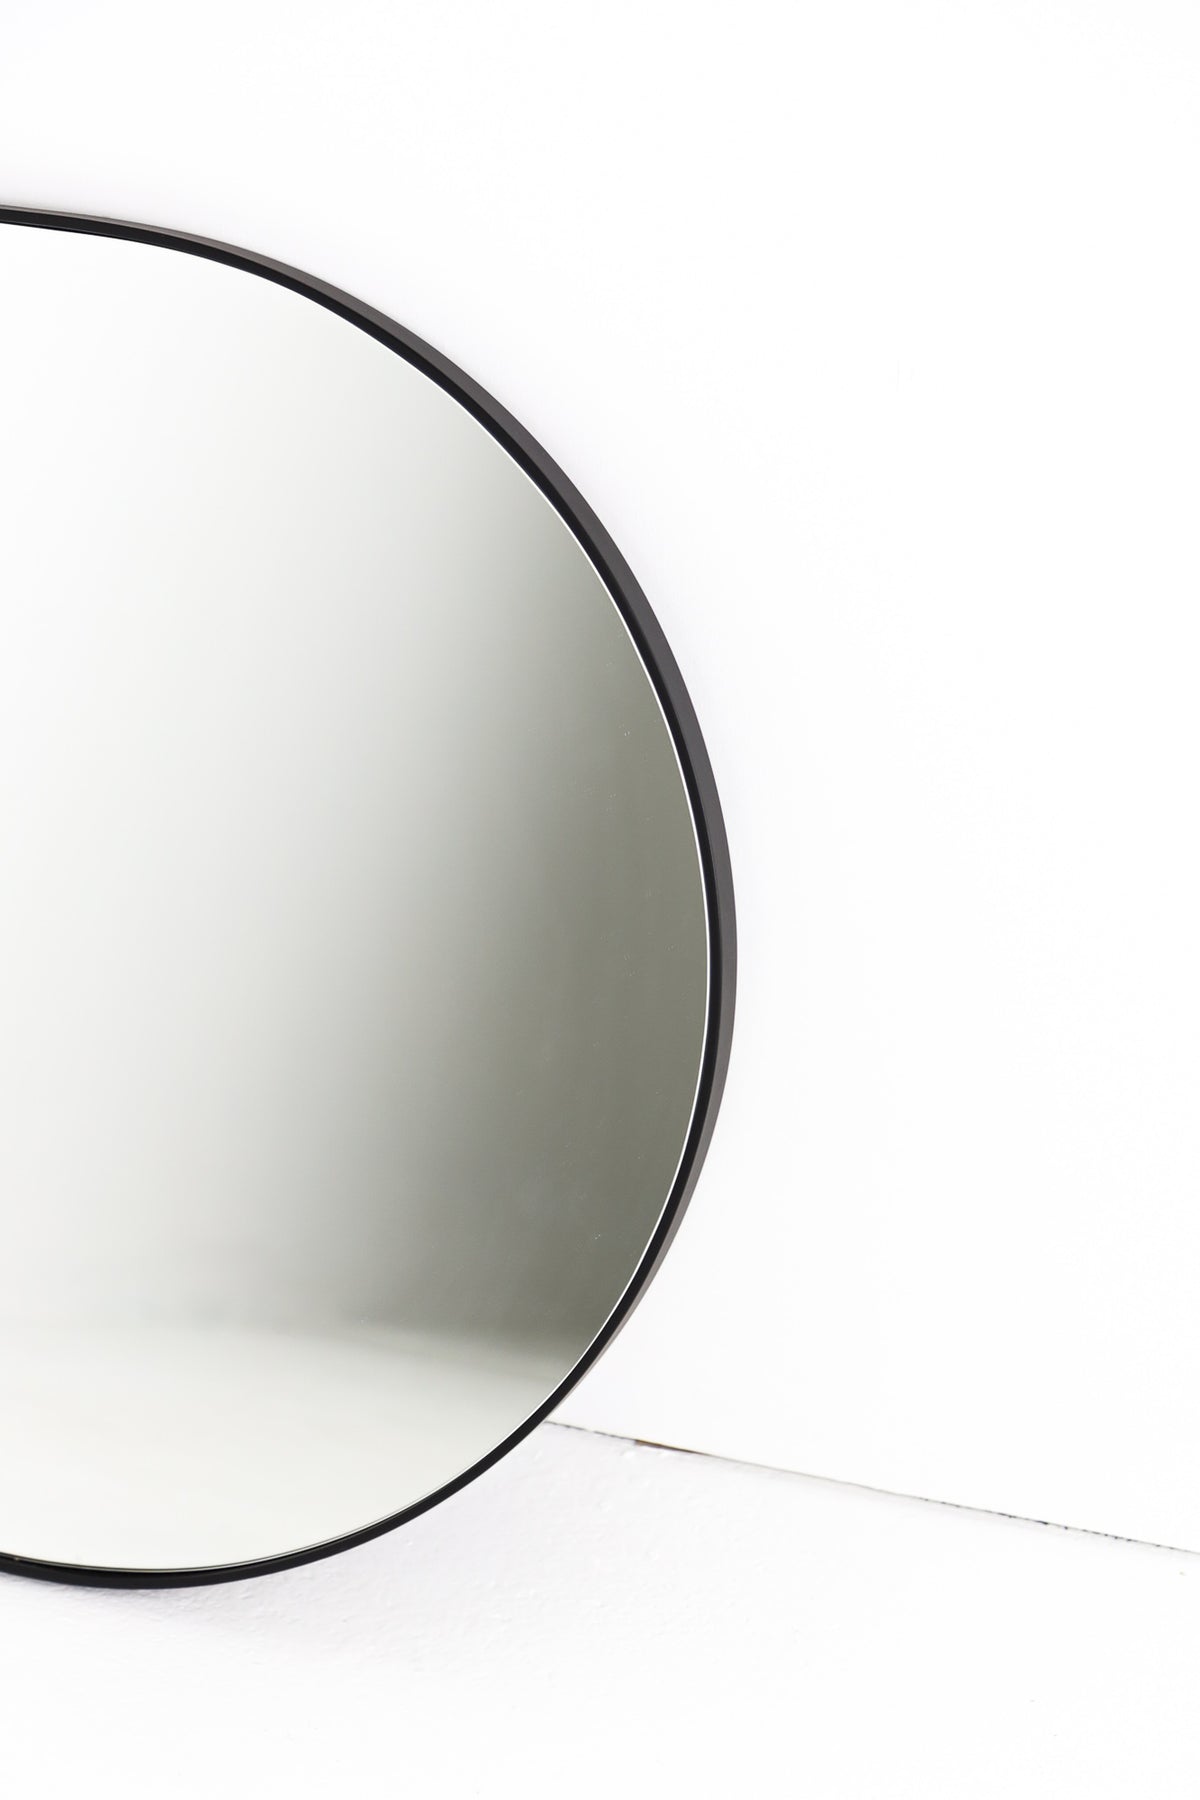 Curved rectangular black frame mirror